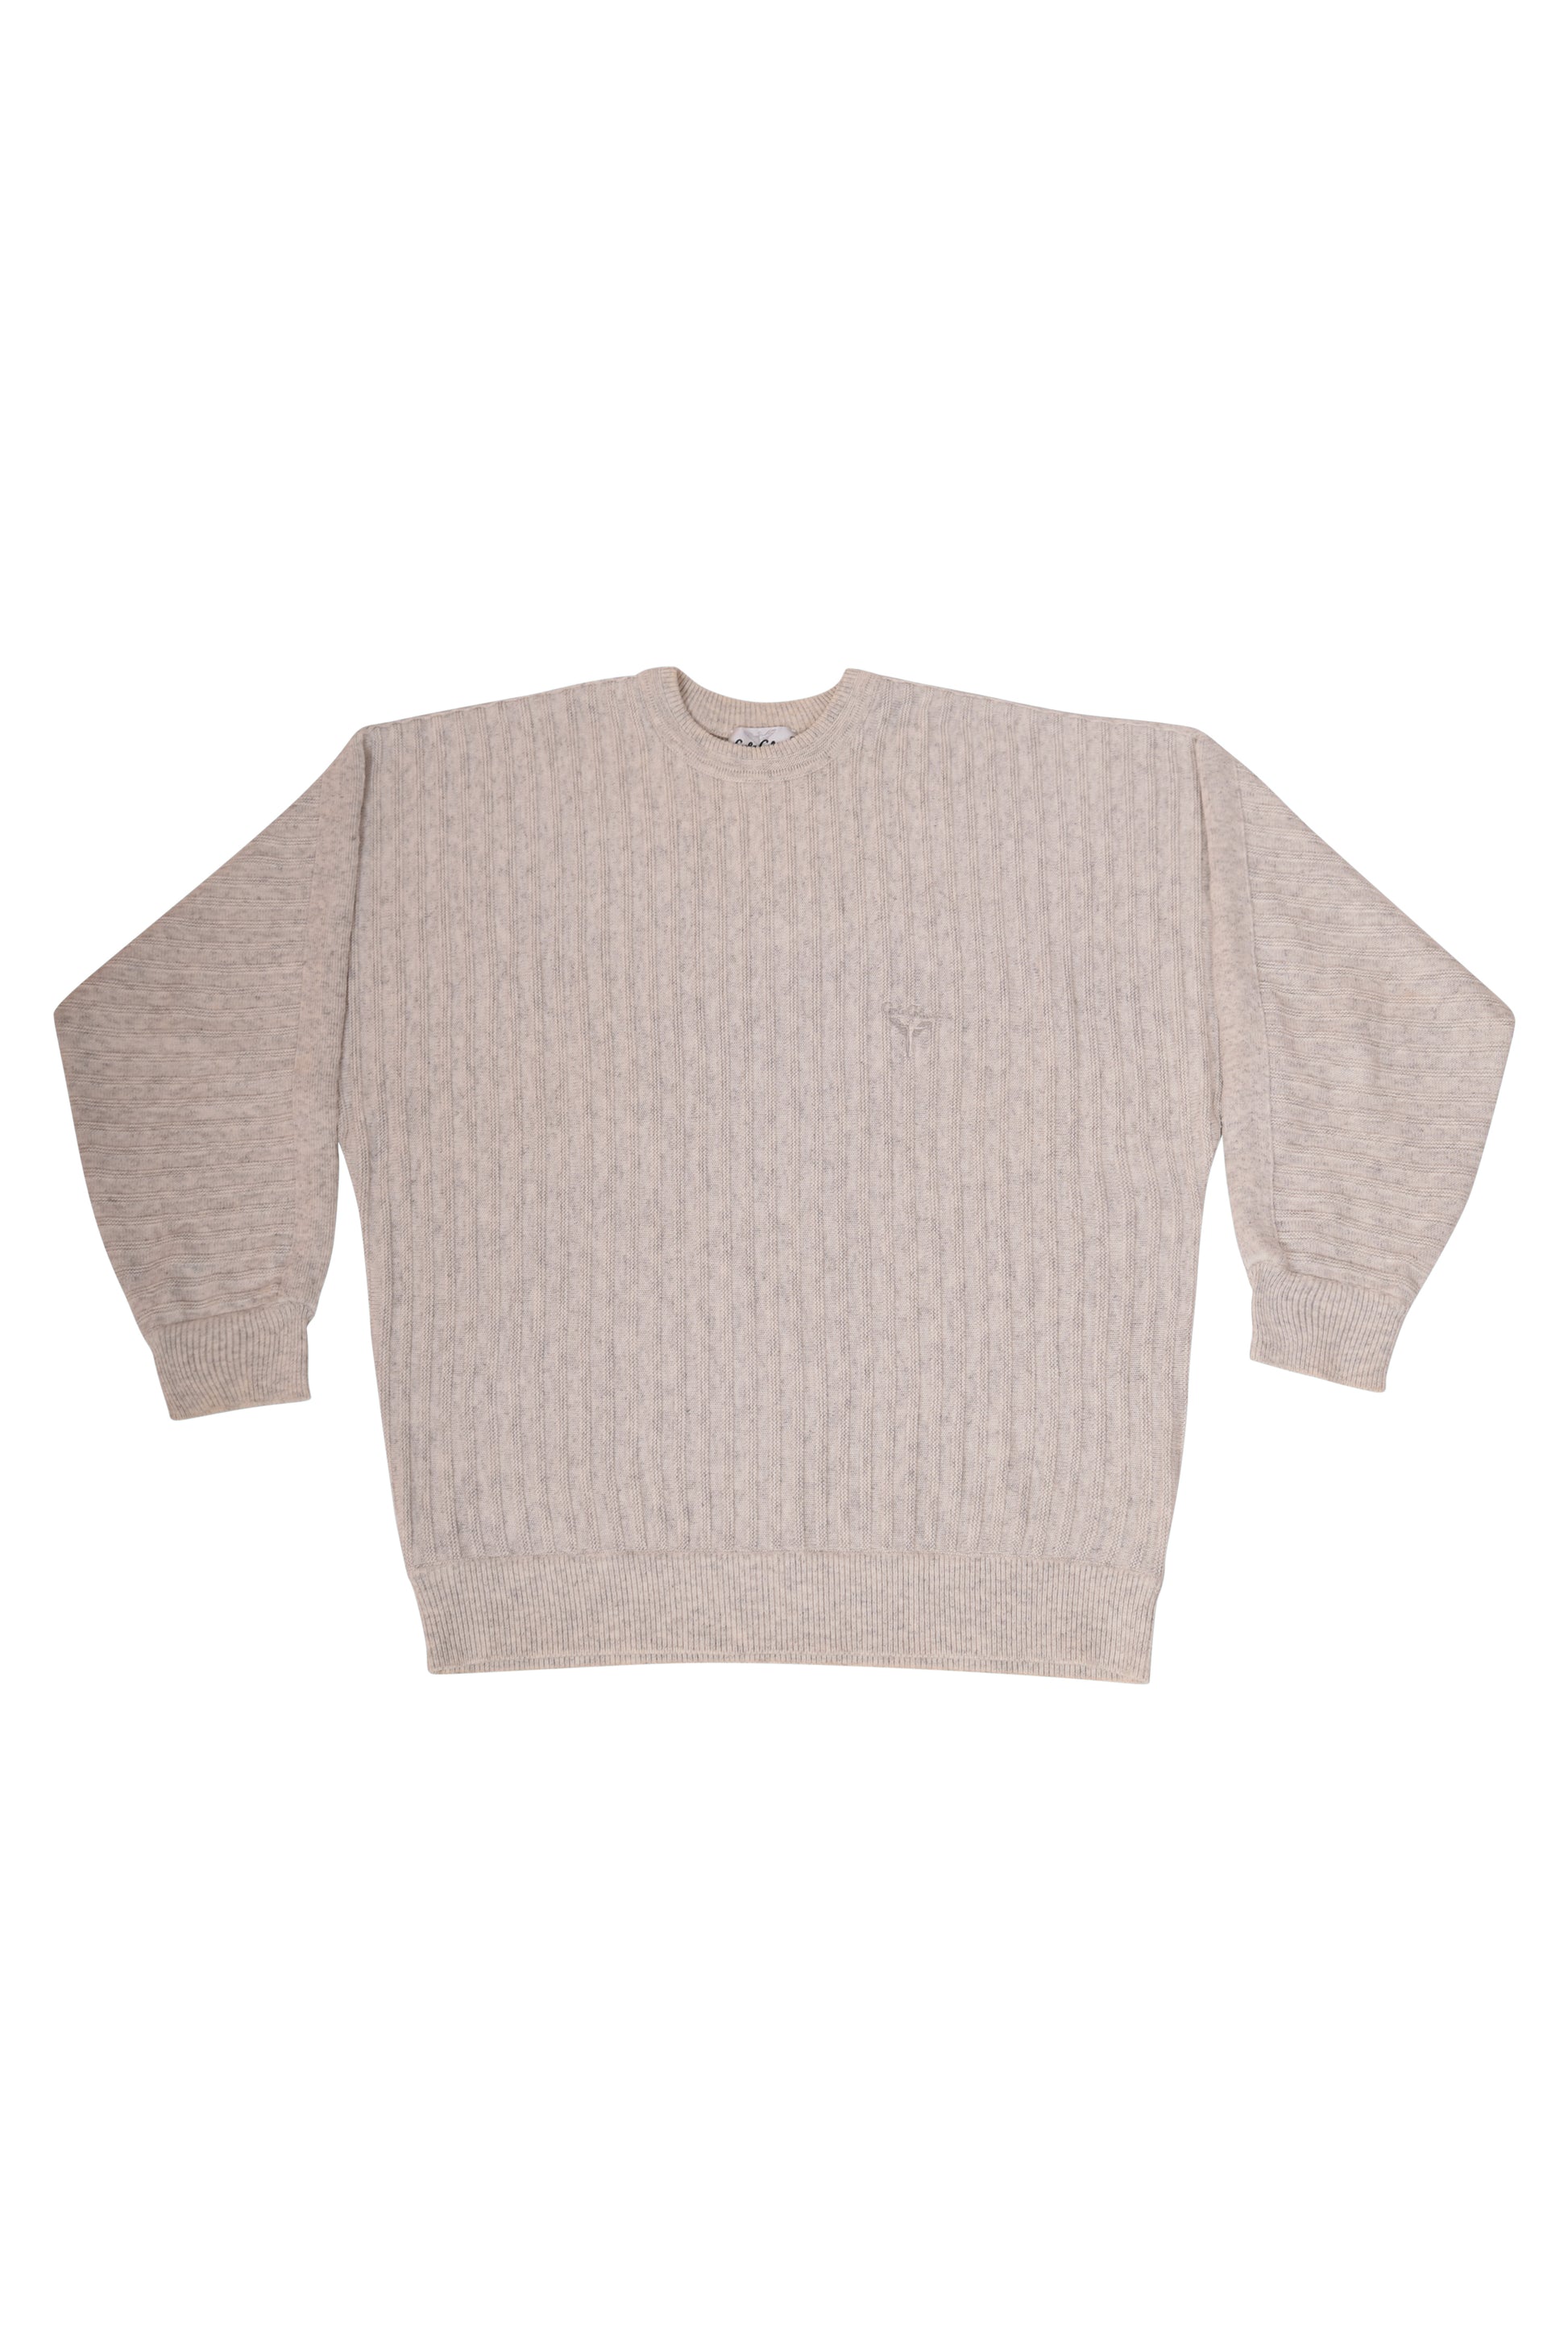 Vintage Carlo Colucci 90's Jumper / Sweater Size L-XL